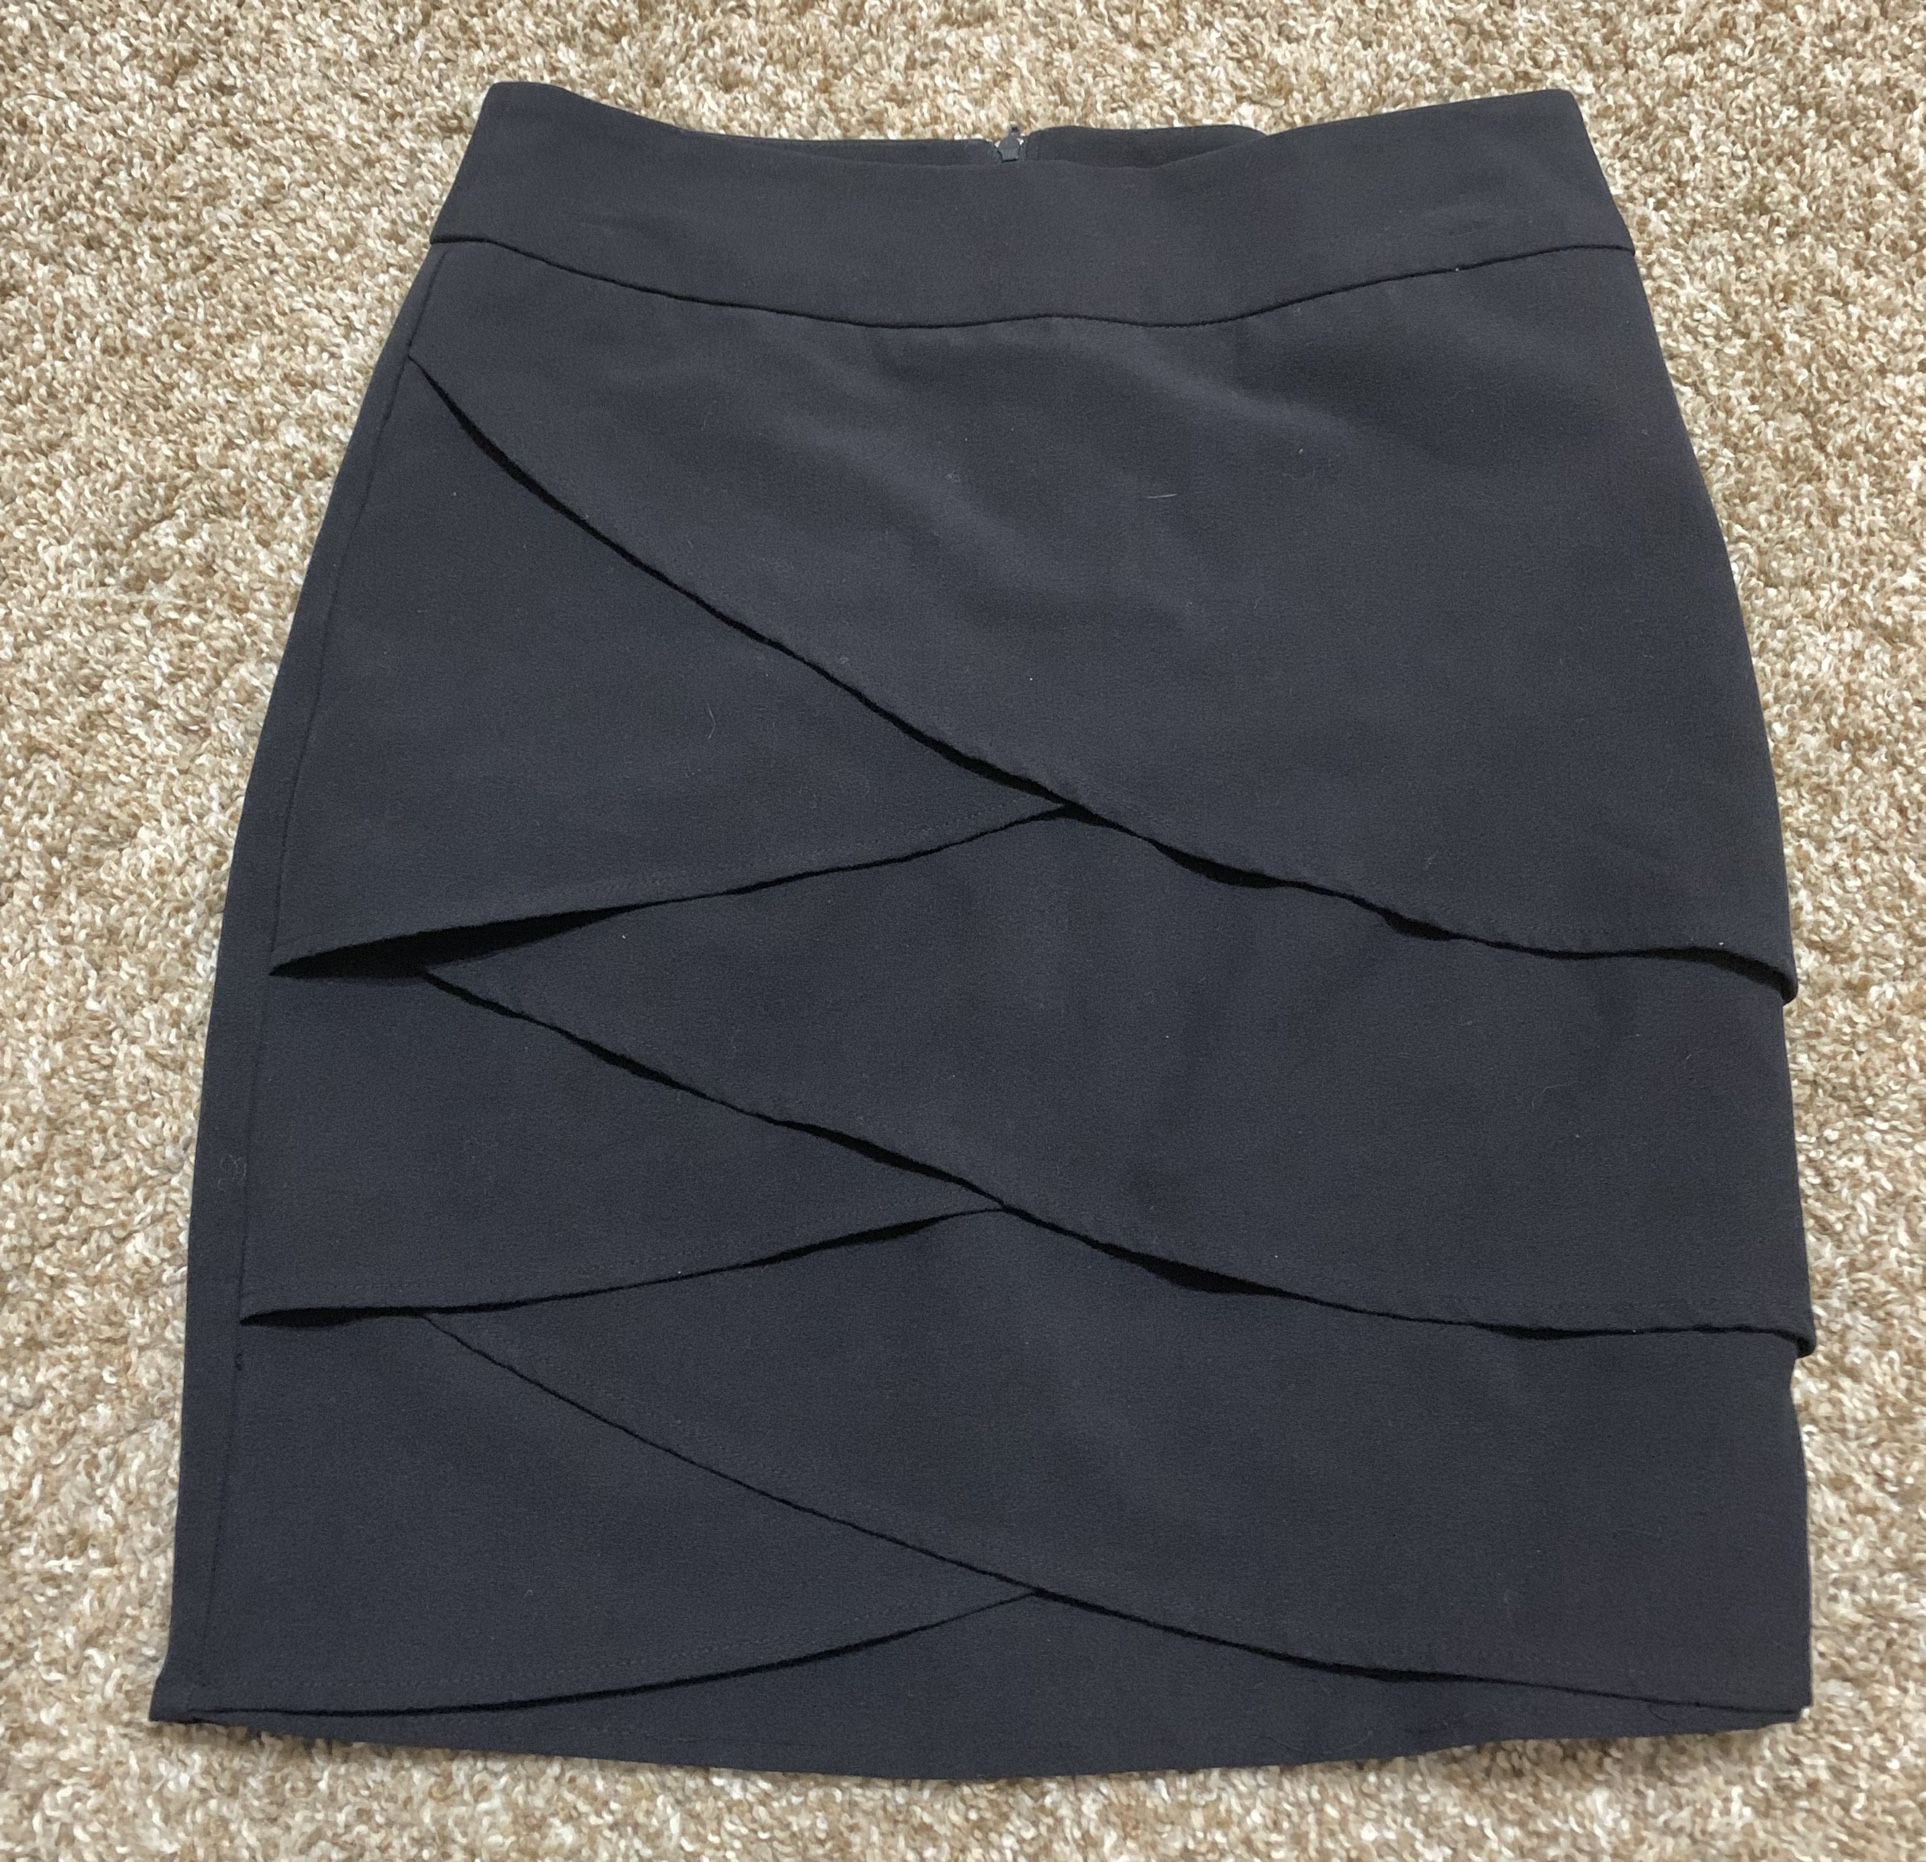 Black pencil skirt size 5